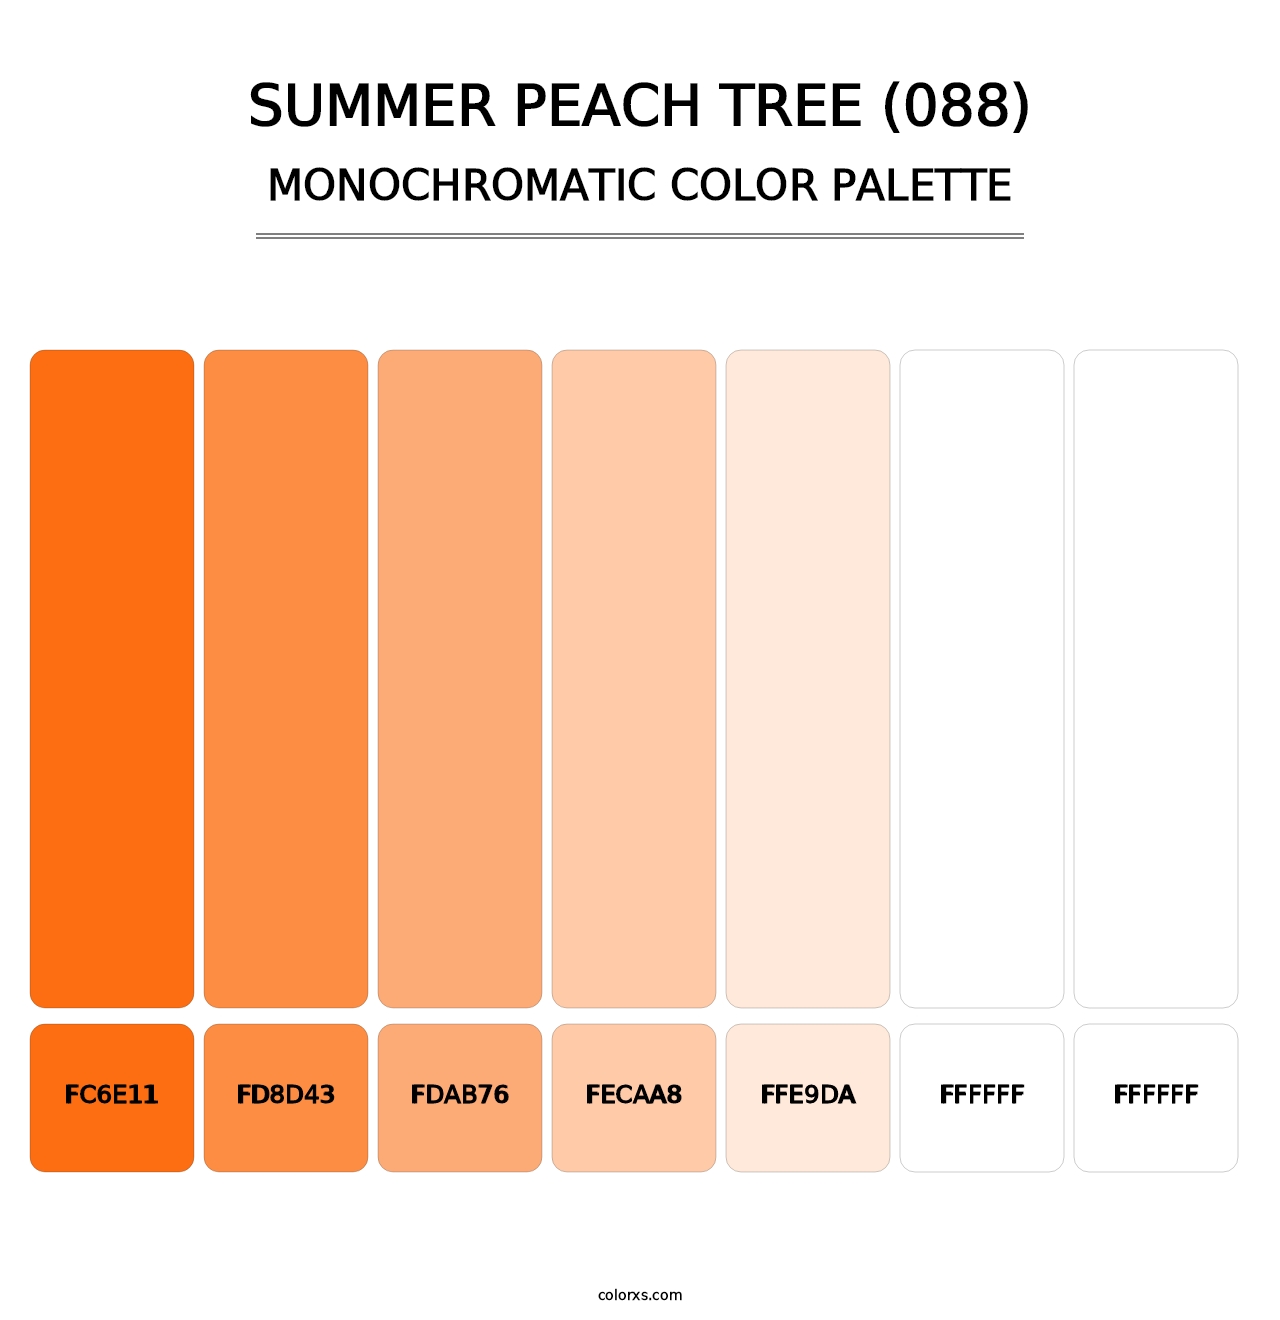 Summer Peach Tree (088) - Monochromatic Color Palette